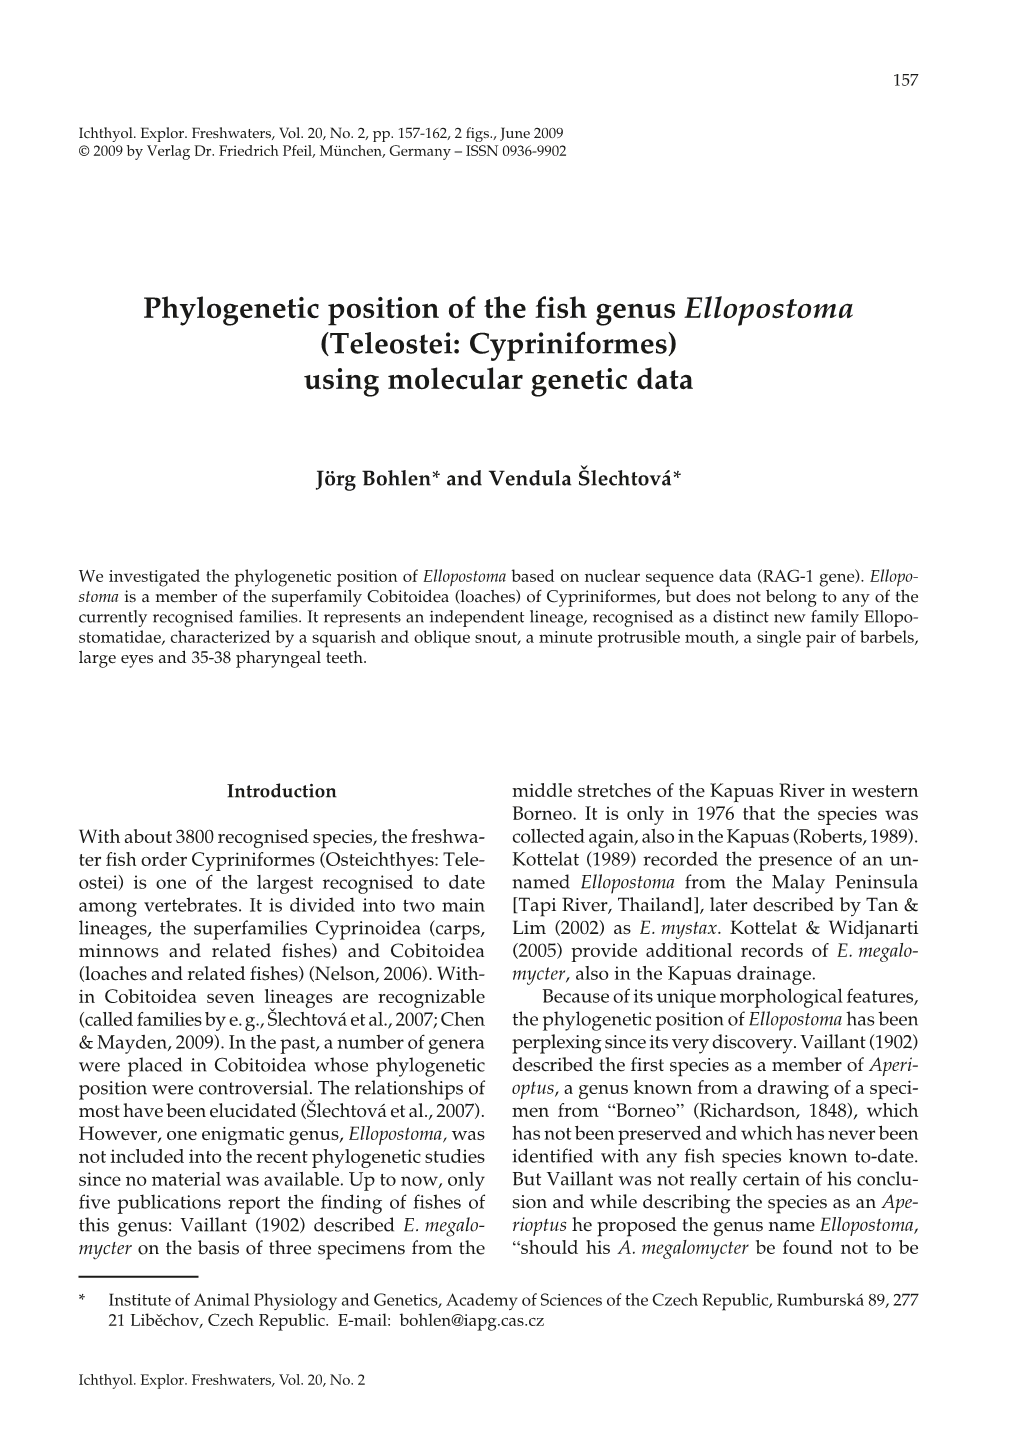 Phylogenetic Position of the Fish Genus Ellopostoma (Teleostei: Cypriniformes) Using Molecular Genetic Data